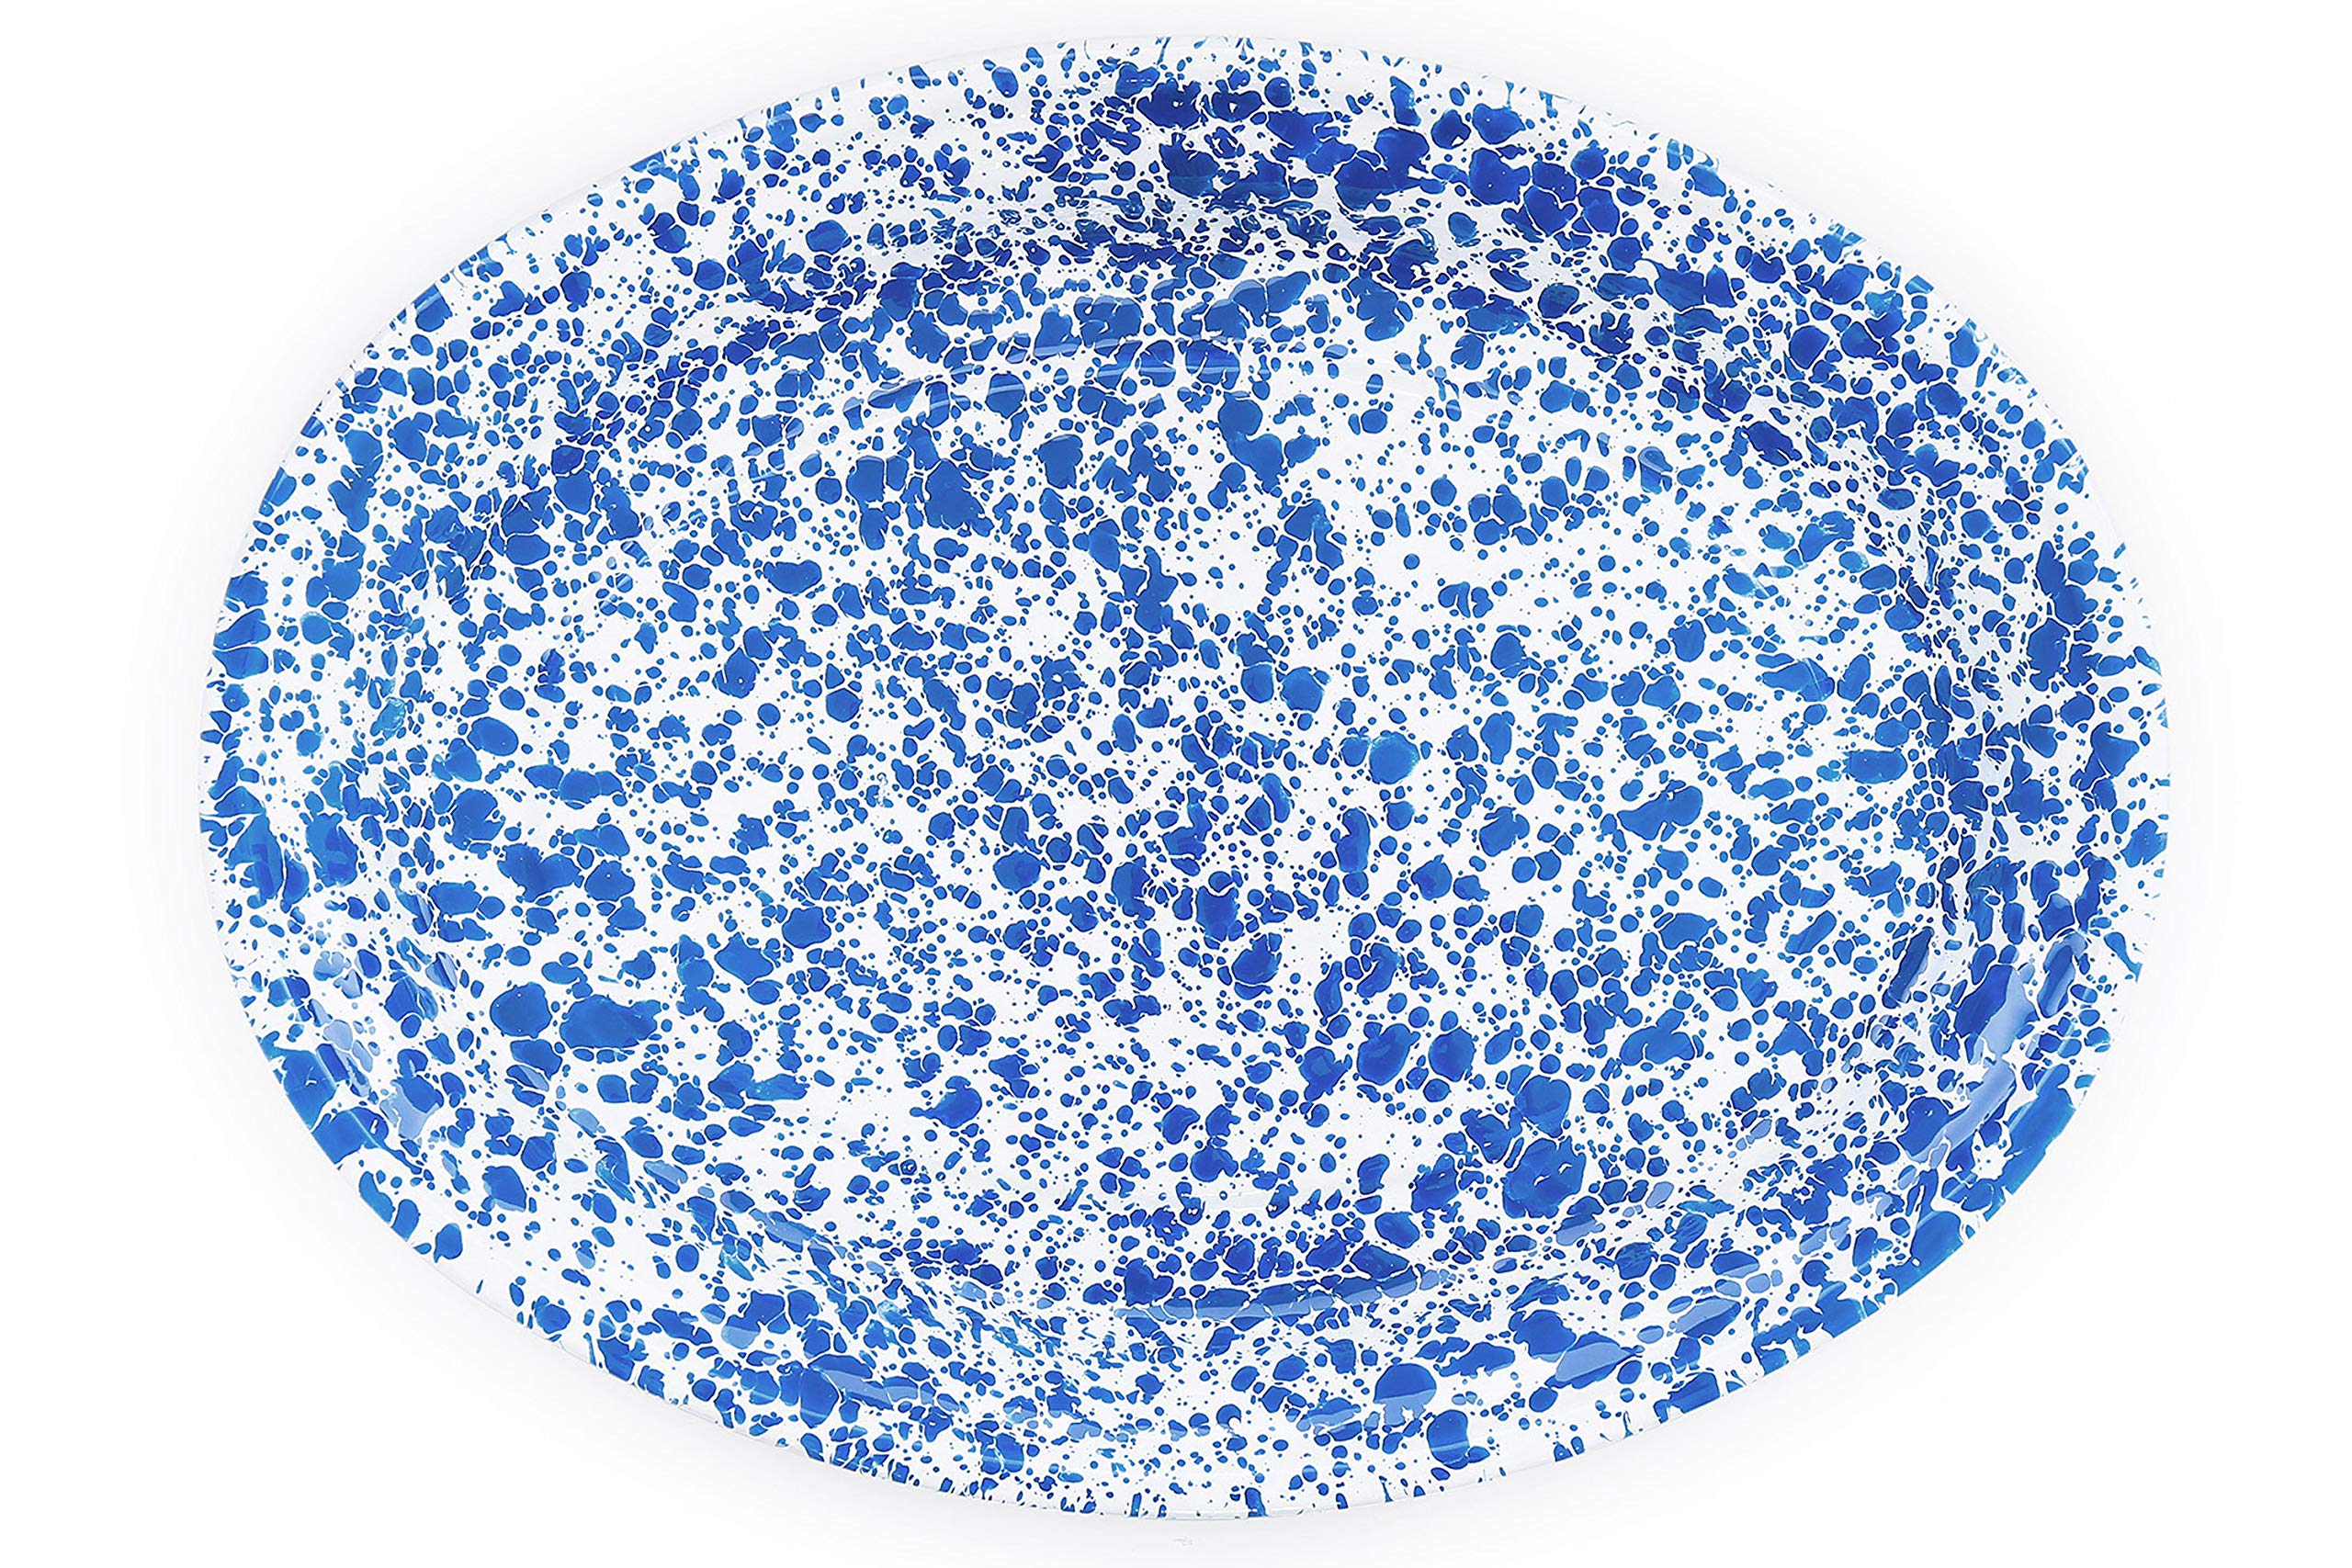 Crow Canyon Home Enamelware Oval Platter, 18 inch, Blue/White Splatter